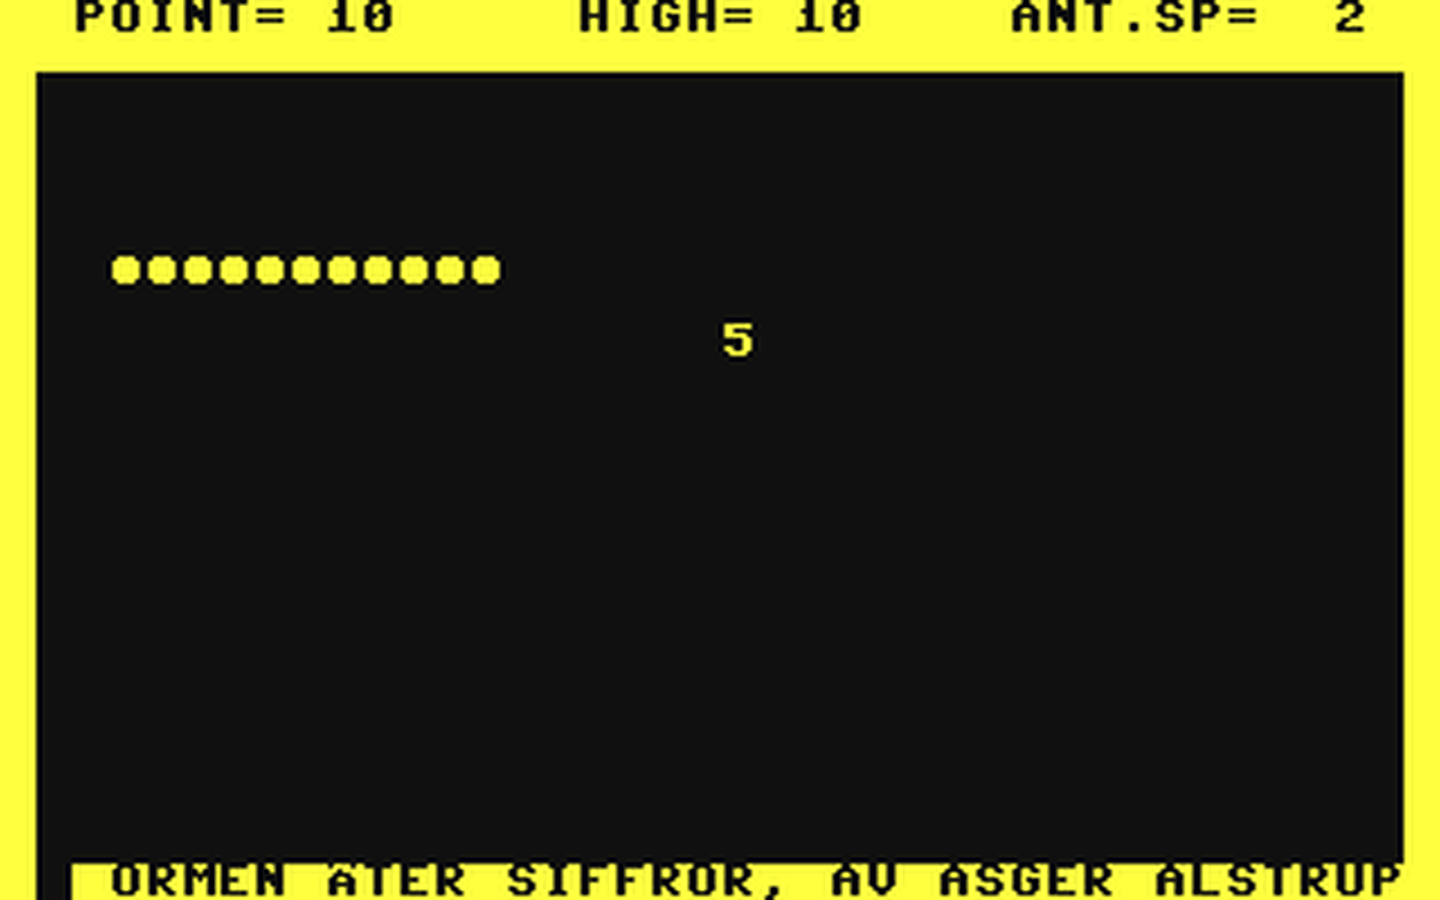 C64 GameBase Ormen_äter_siffror (Public_Domain)